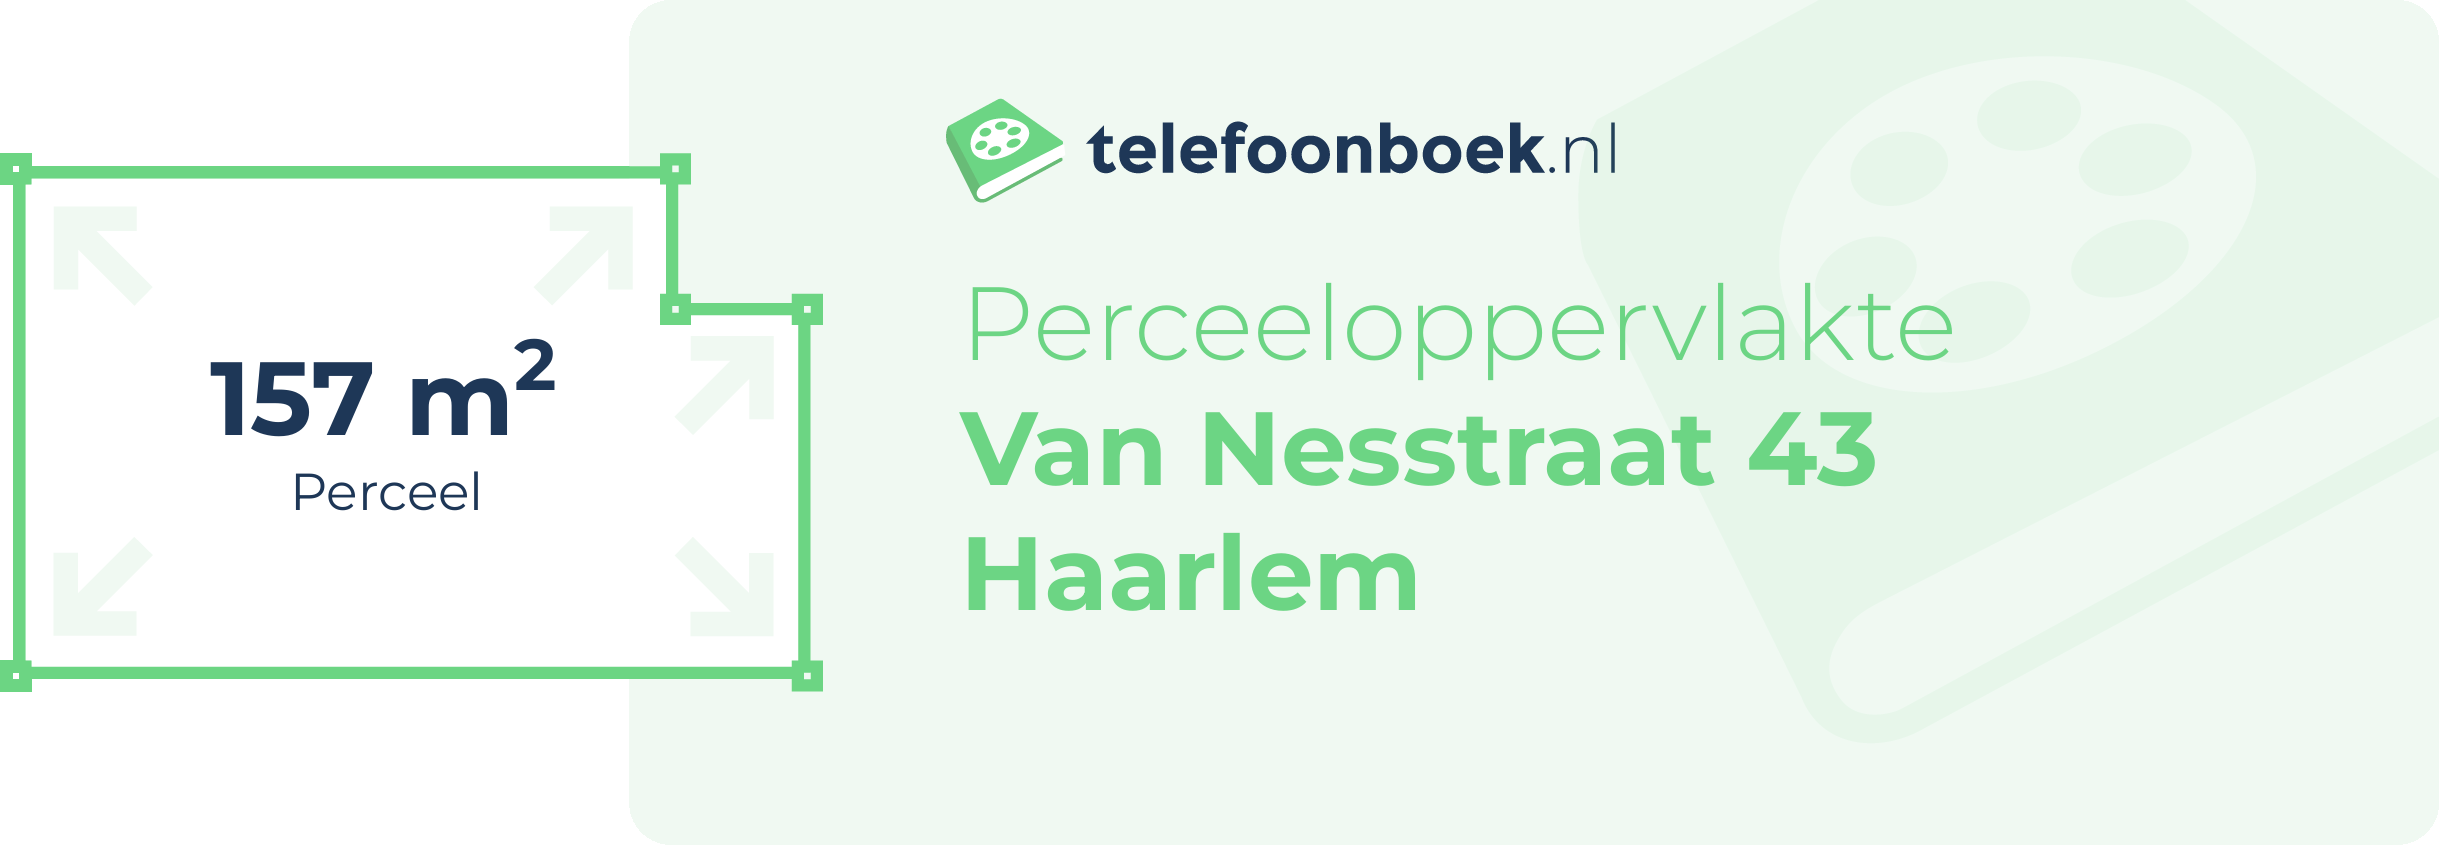 Perceeloppervlakte Van Nesstraat 43 Haarlem